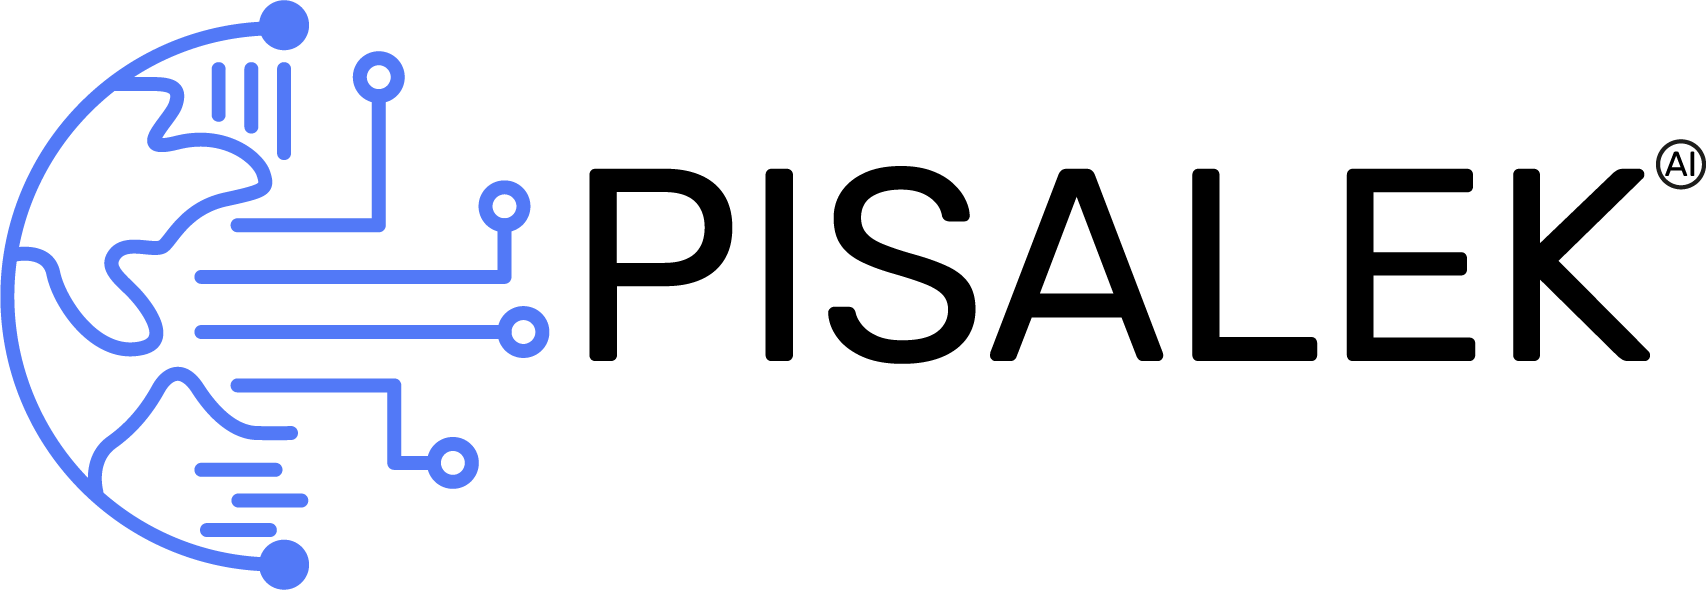 спортзал-нижний колонтитул-логотип